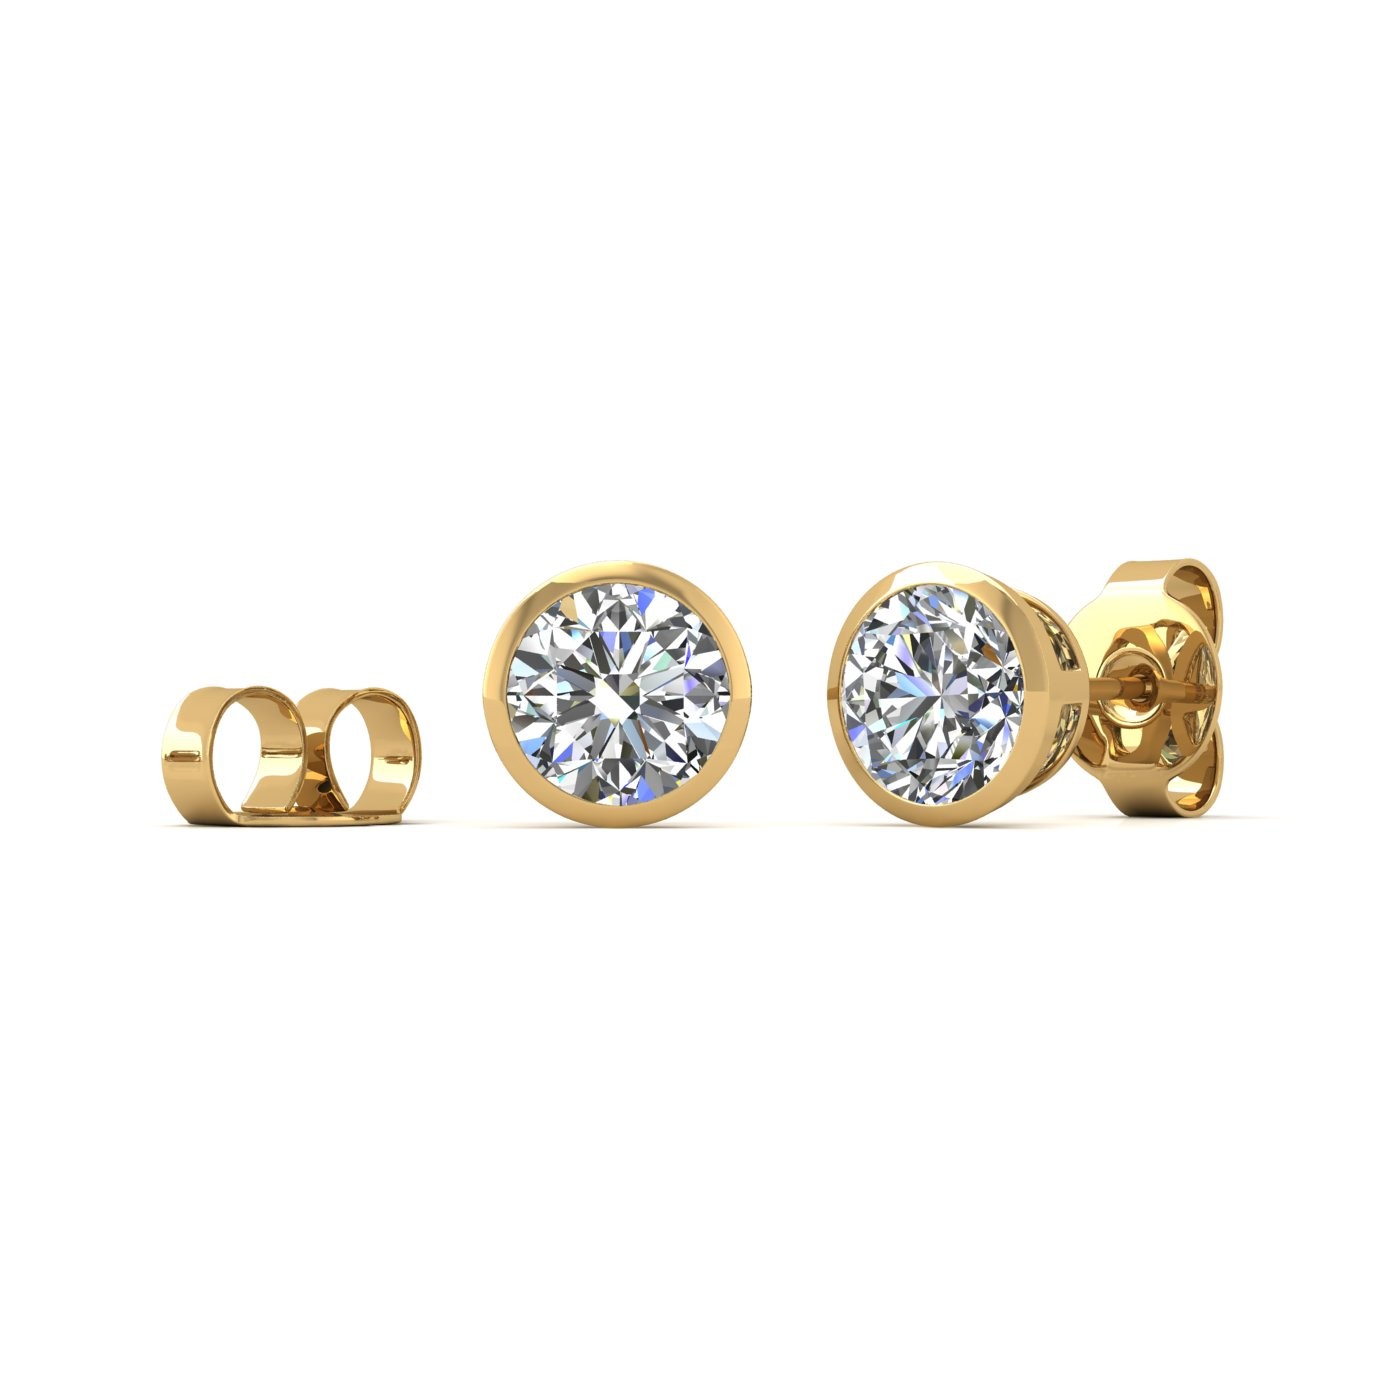 18k yellow gold 0,5 ct each (1,0 tcw) round brilliant cut diamond bezel set earring studs